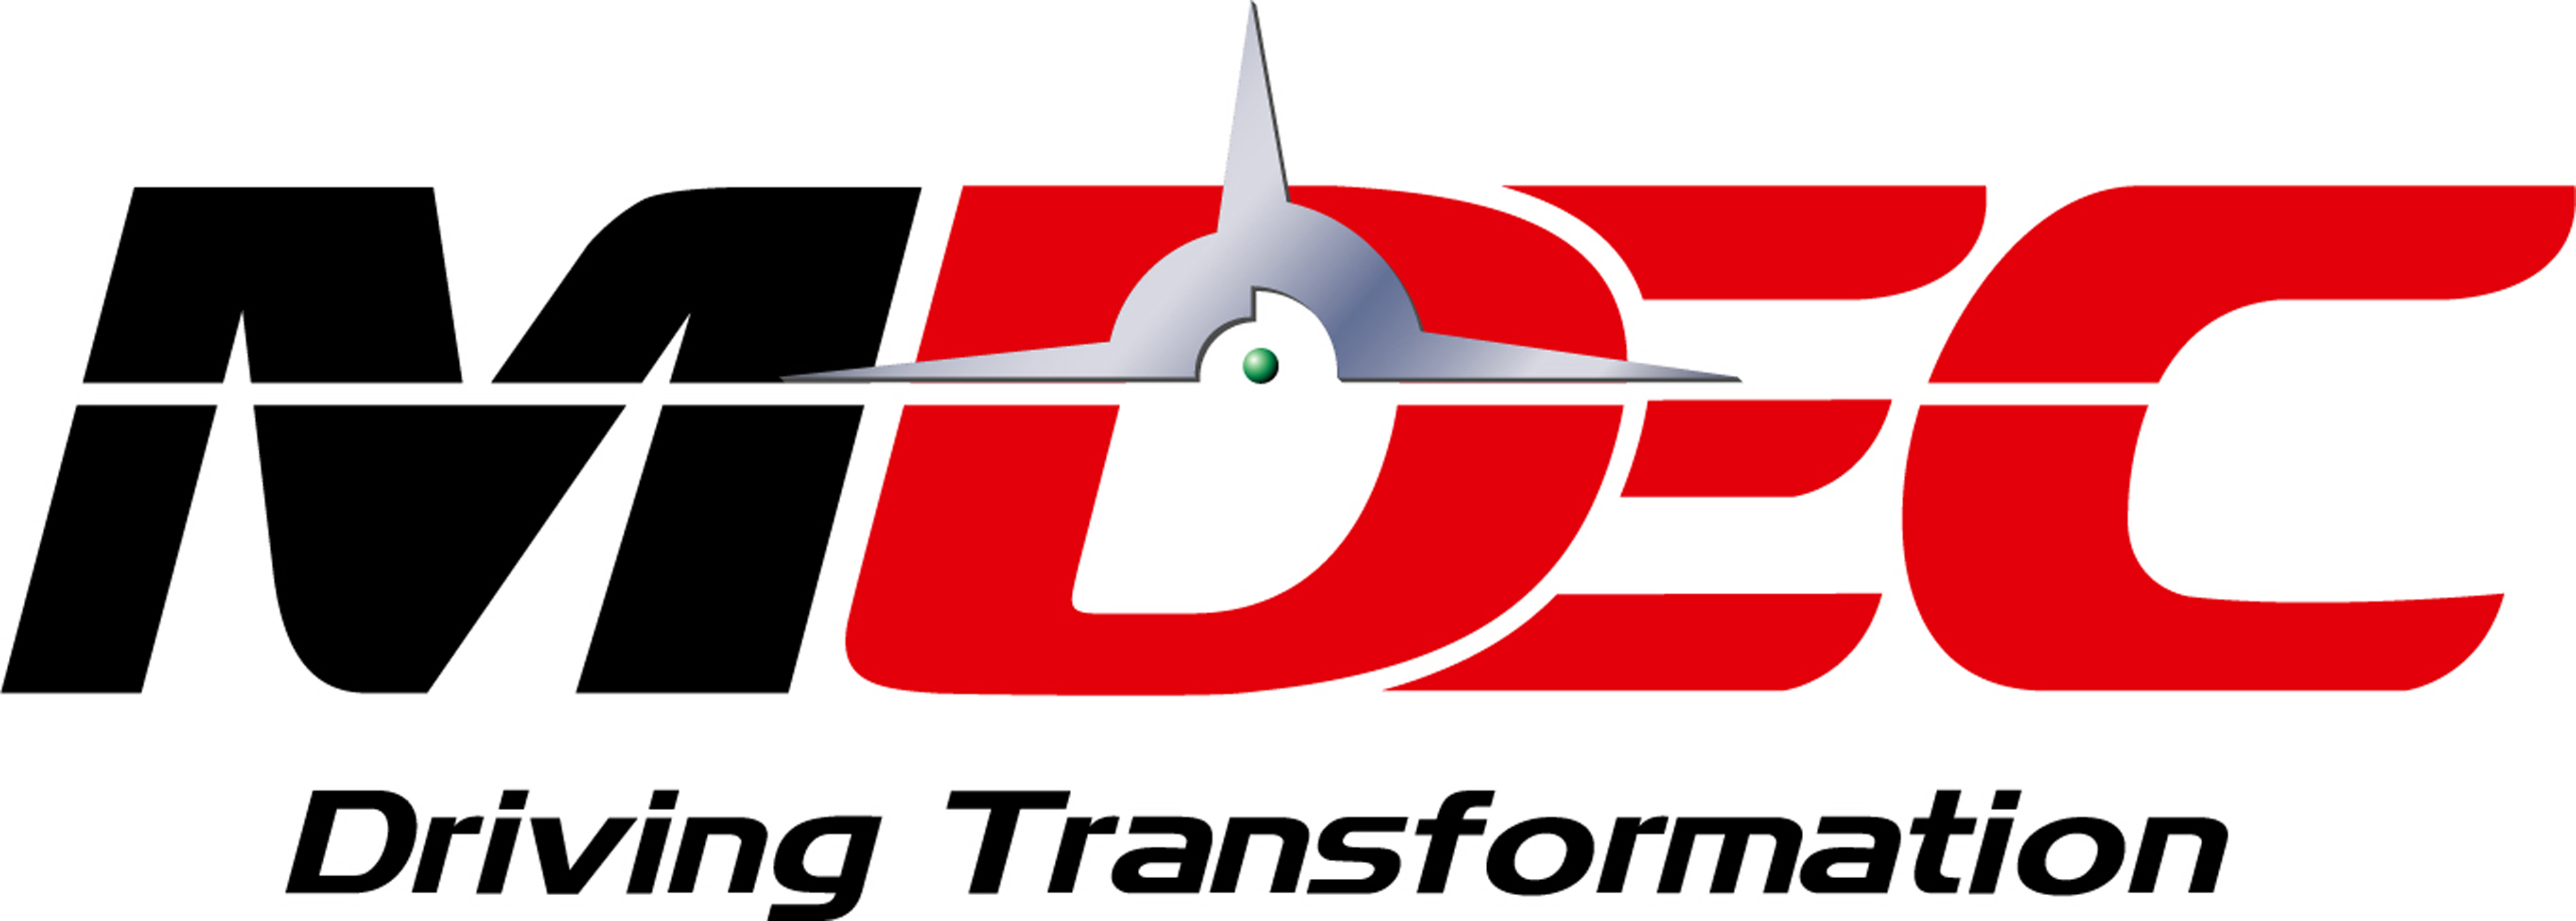 MDEC logo